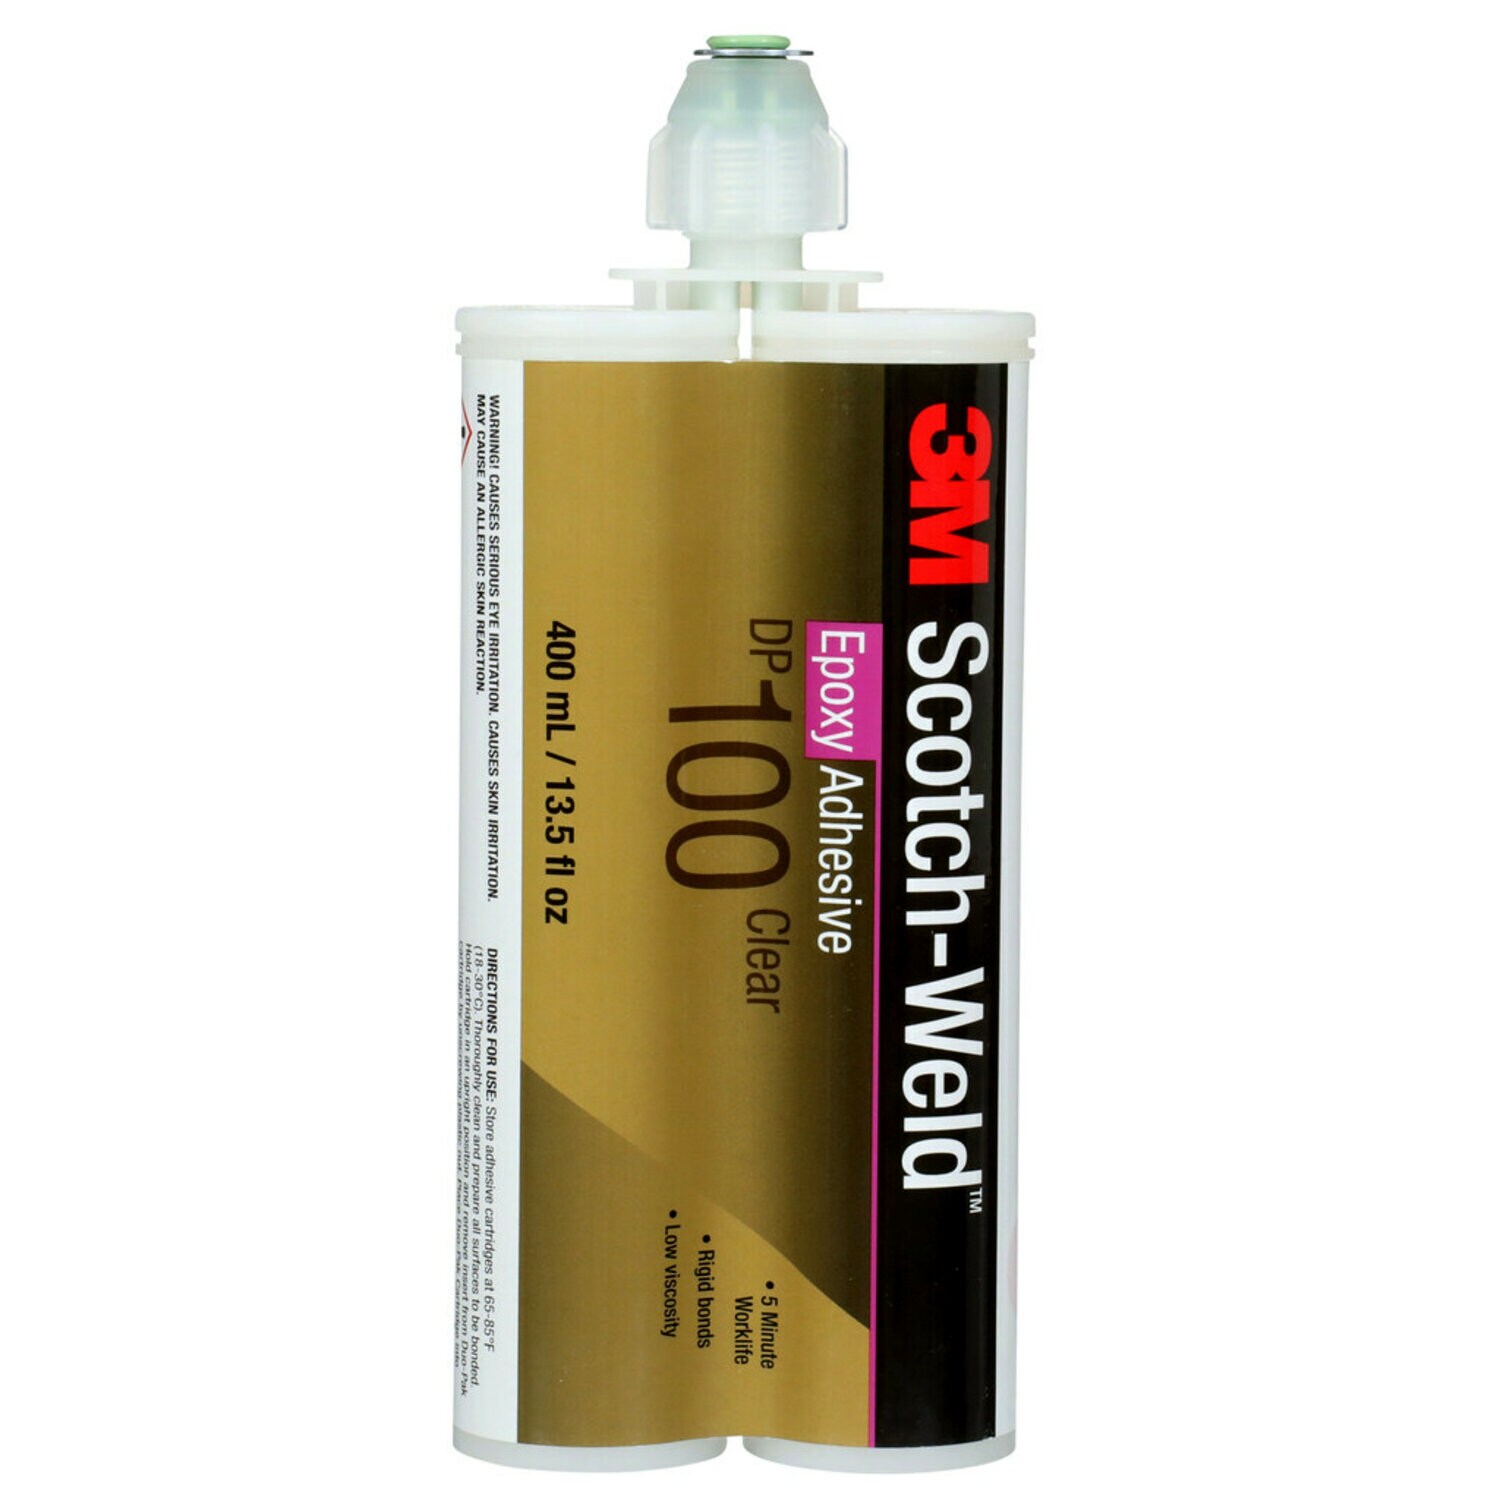 7000121318 - 3M Scotch-Weld Epoxy Adhesive DP100, Clear, 400 mL Duo-Pak, 6
Pack/Case